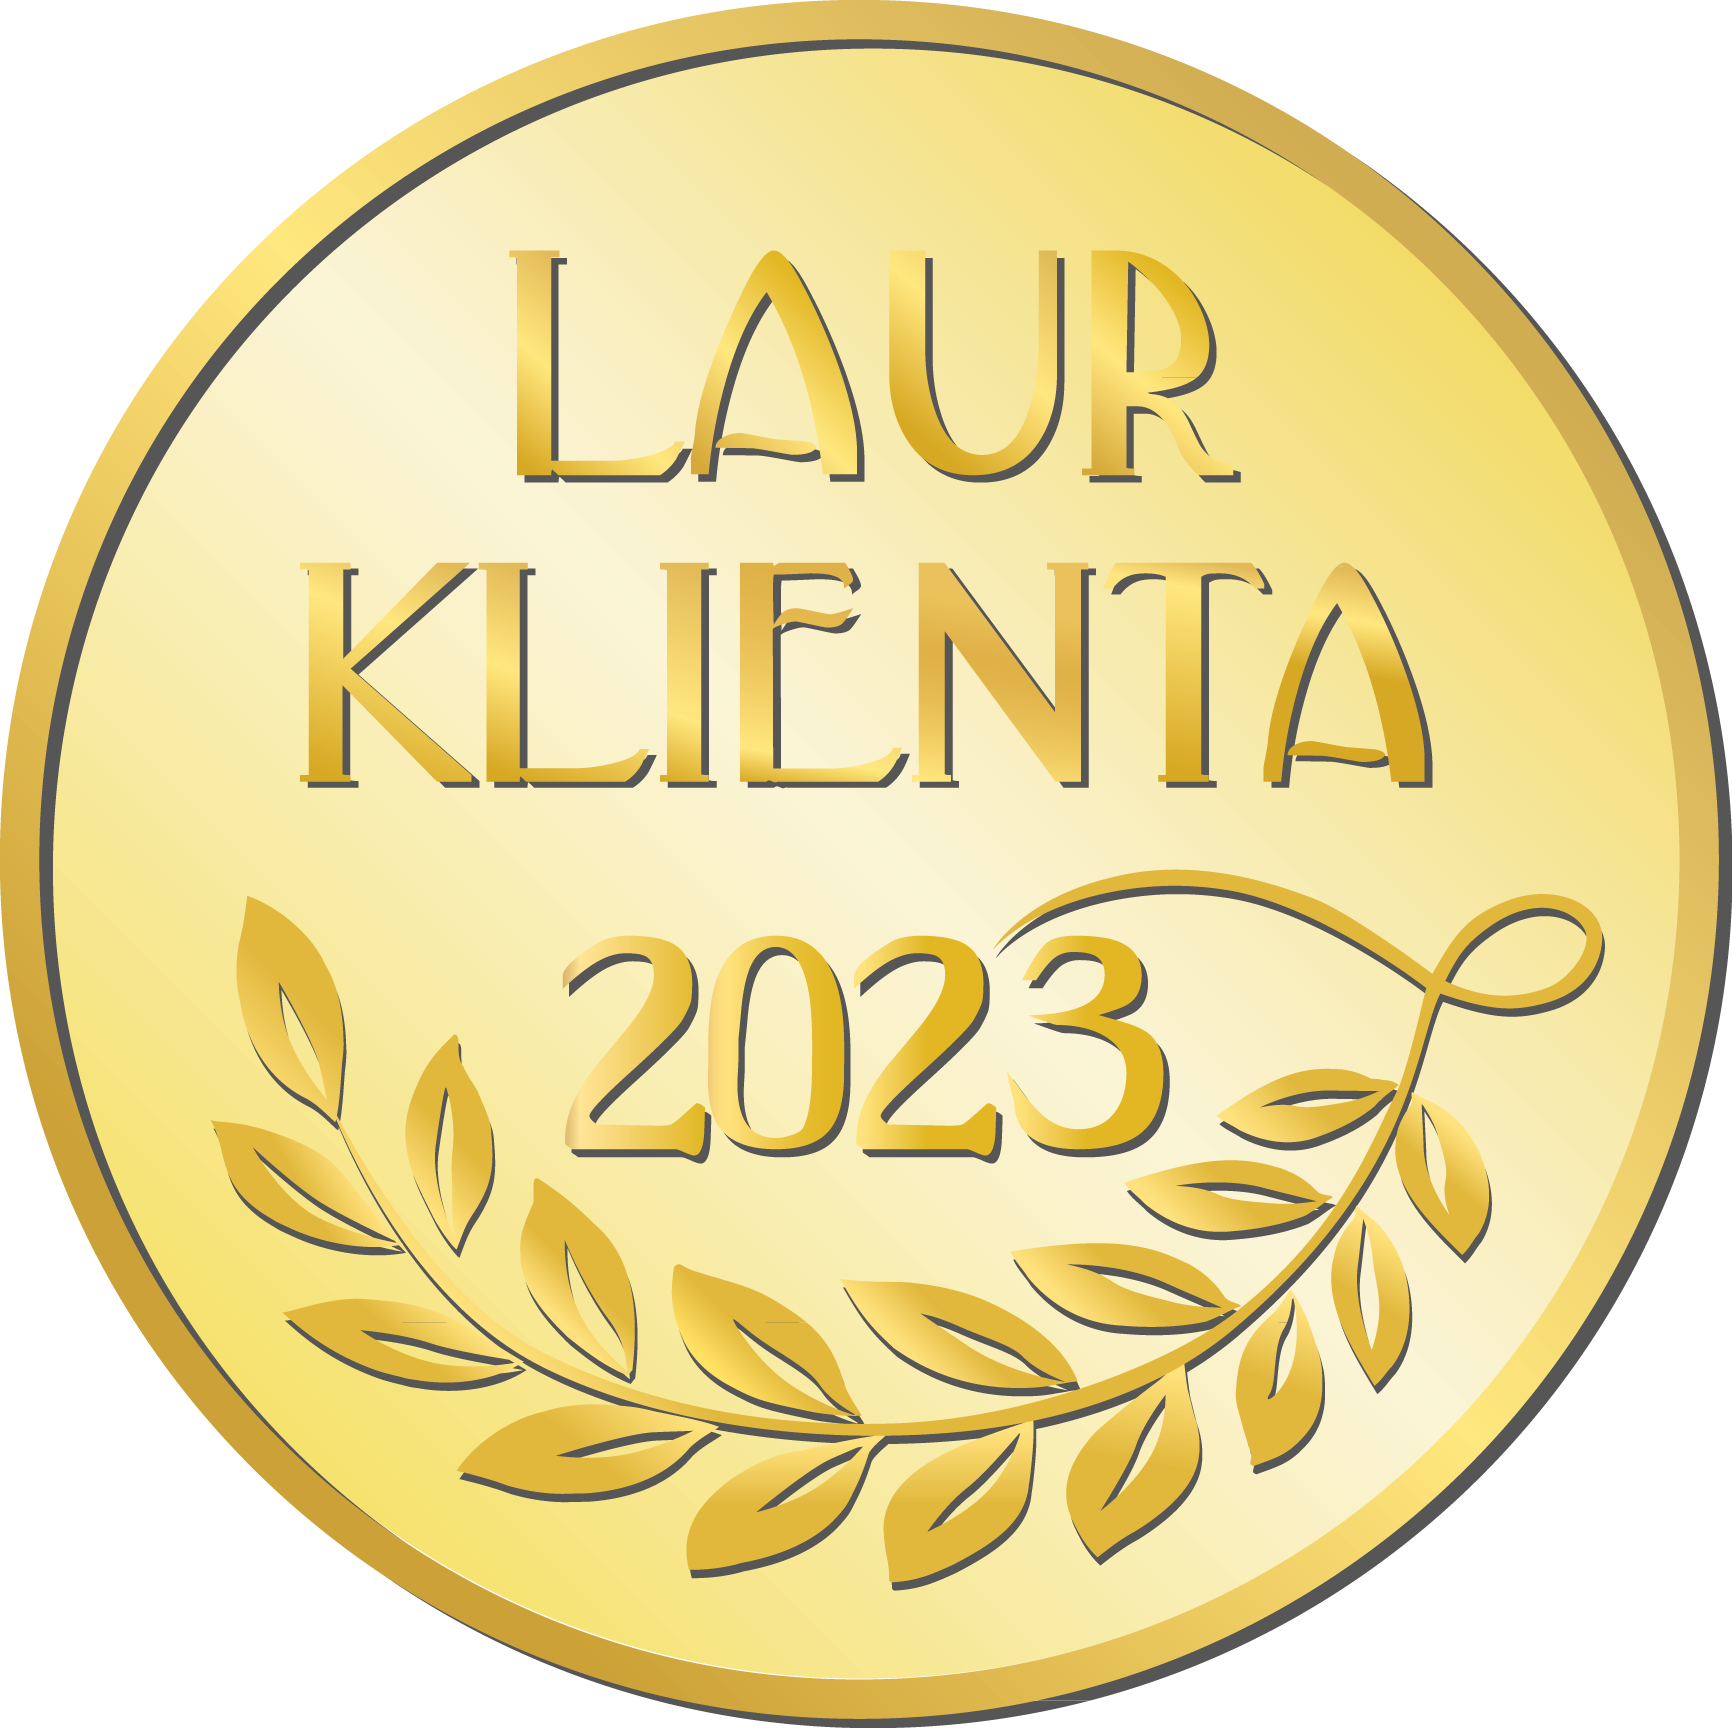 LaurKlientazloty2023